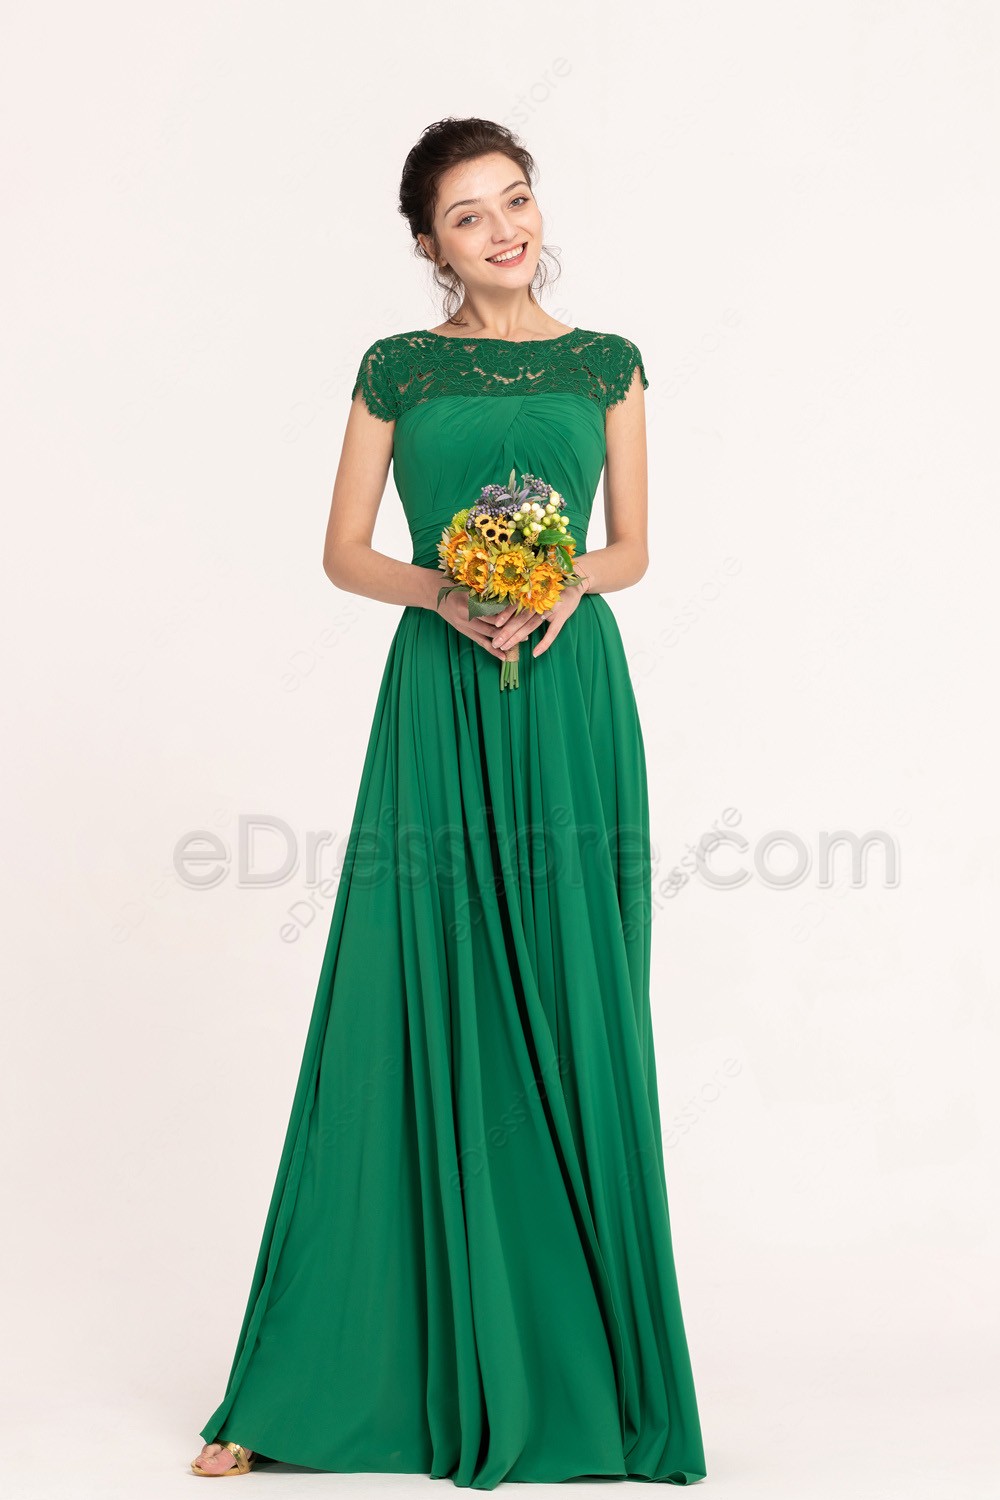 Emerald Green Modest Long Bridesmaid Dresses Cap Sleeves